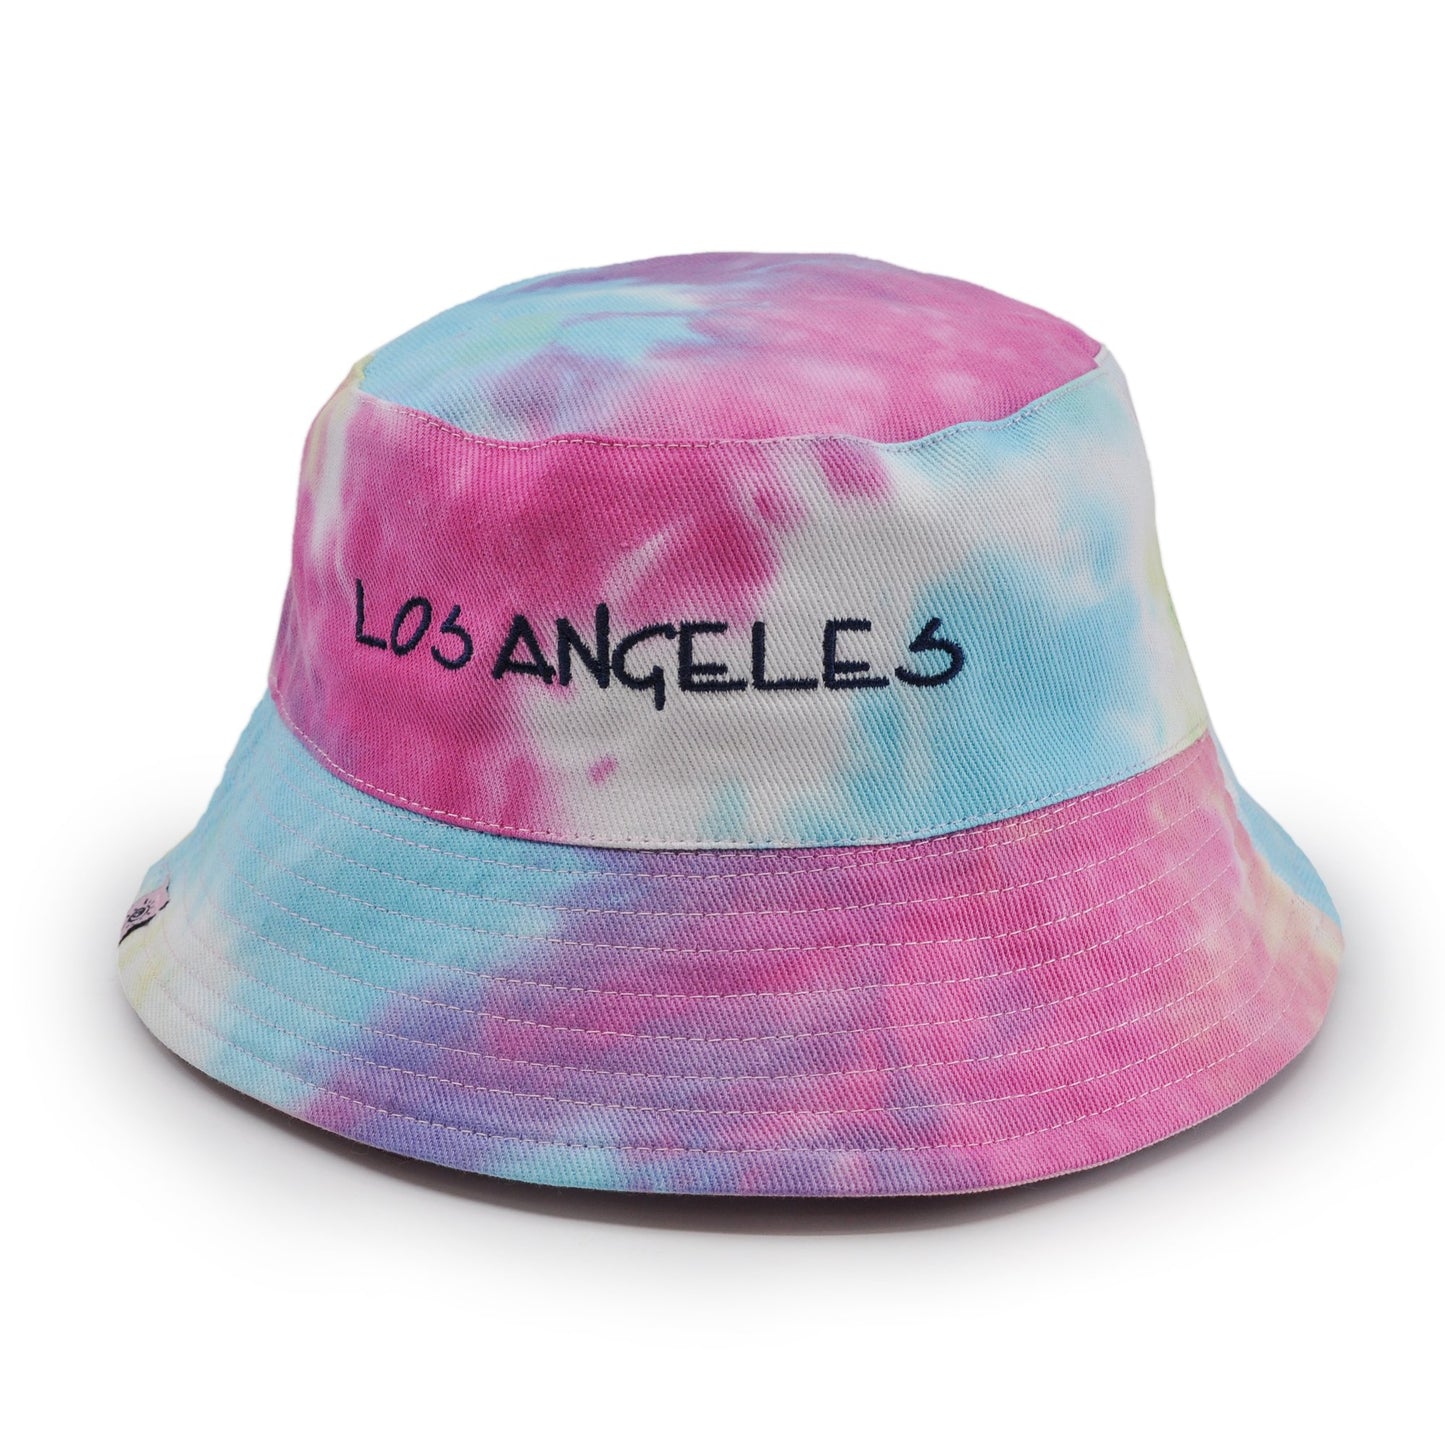 Reversible Your Beach City Unisex 100% Cotton Packable Summer Travel Bucket Beach Sun Hat Outdoor Cap. (Tie Dye Rainbow/Pink)